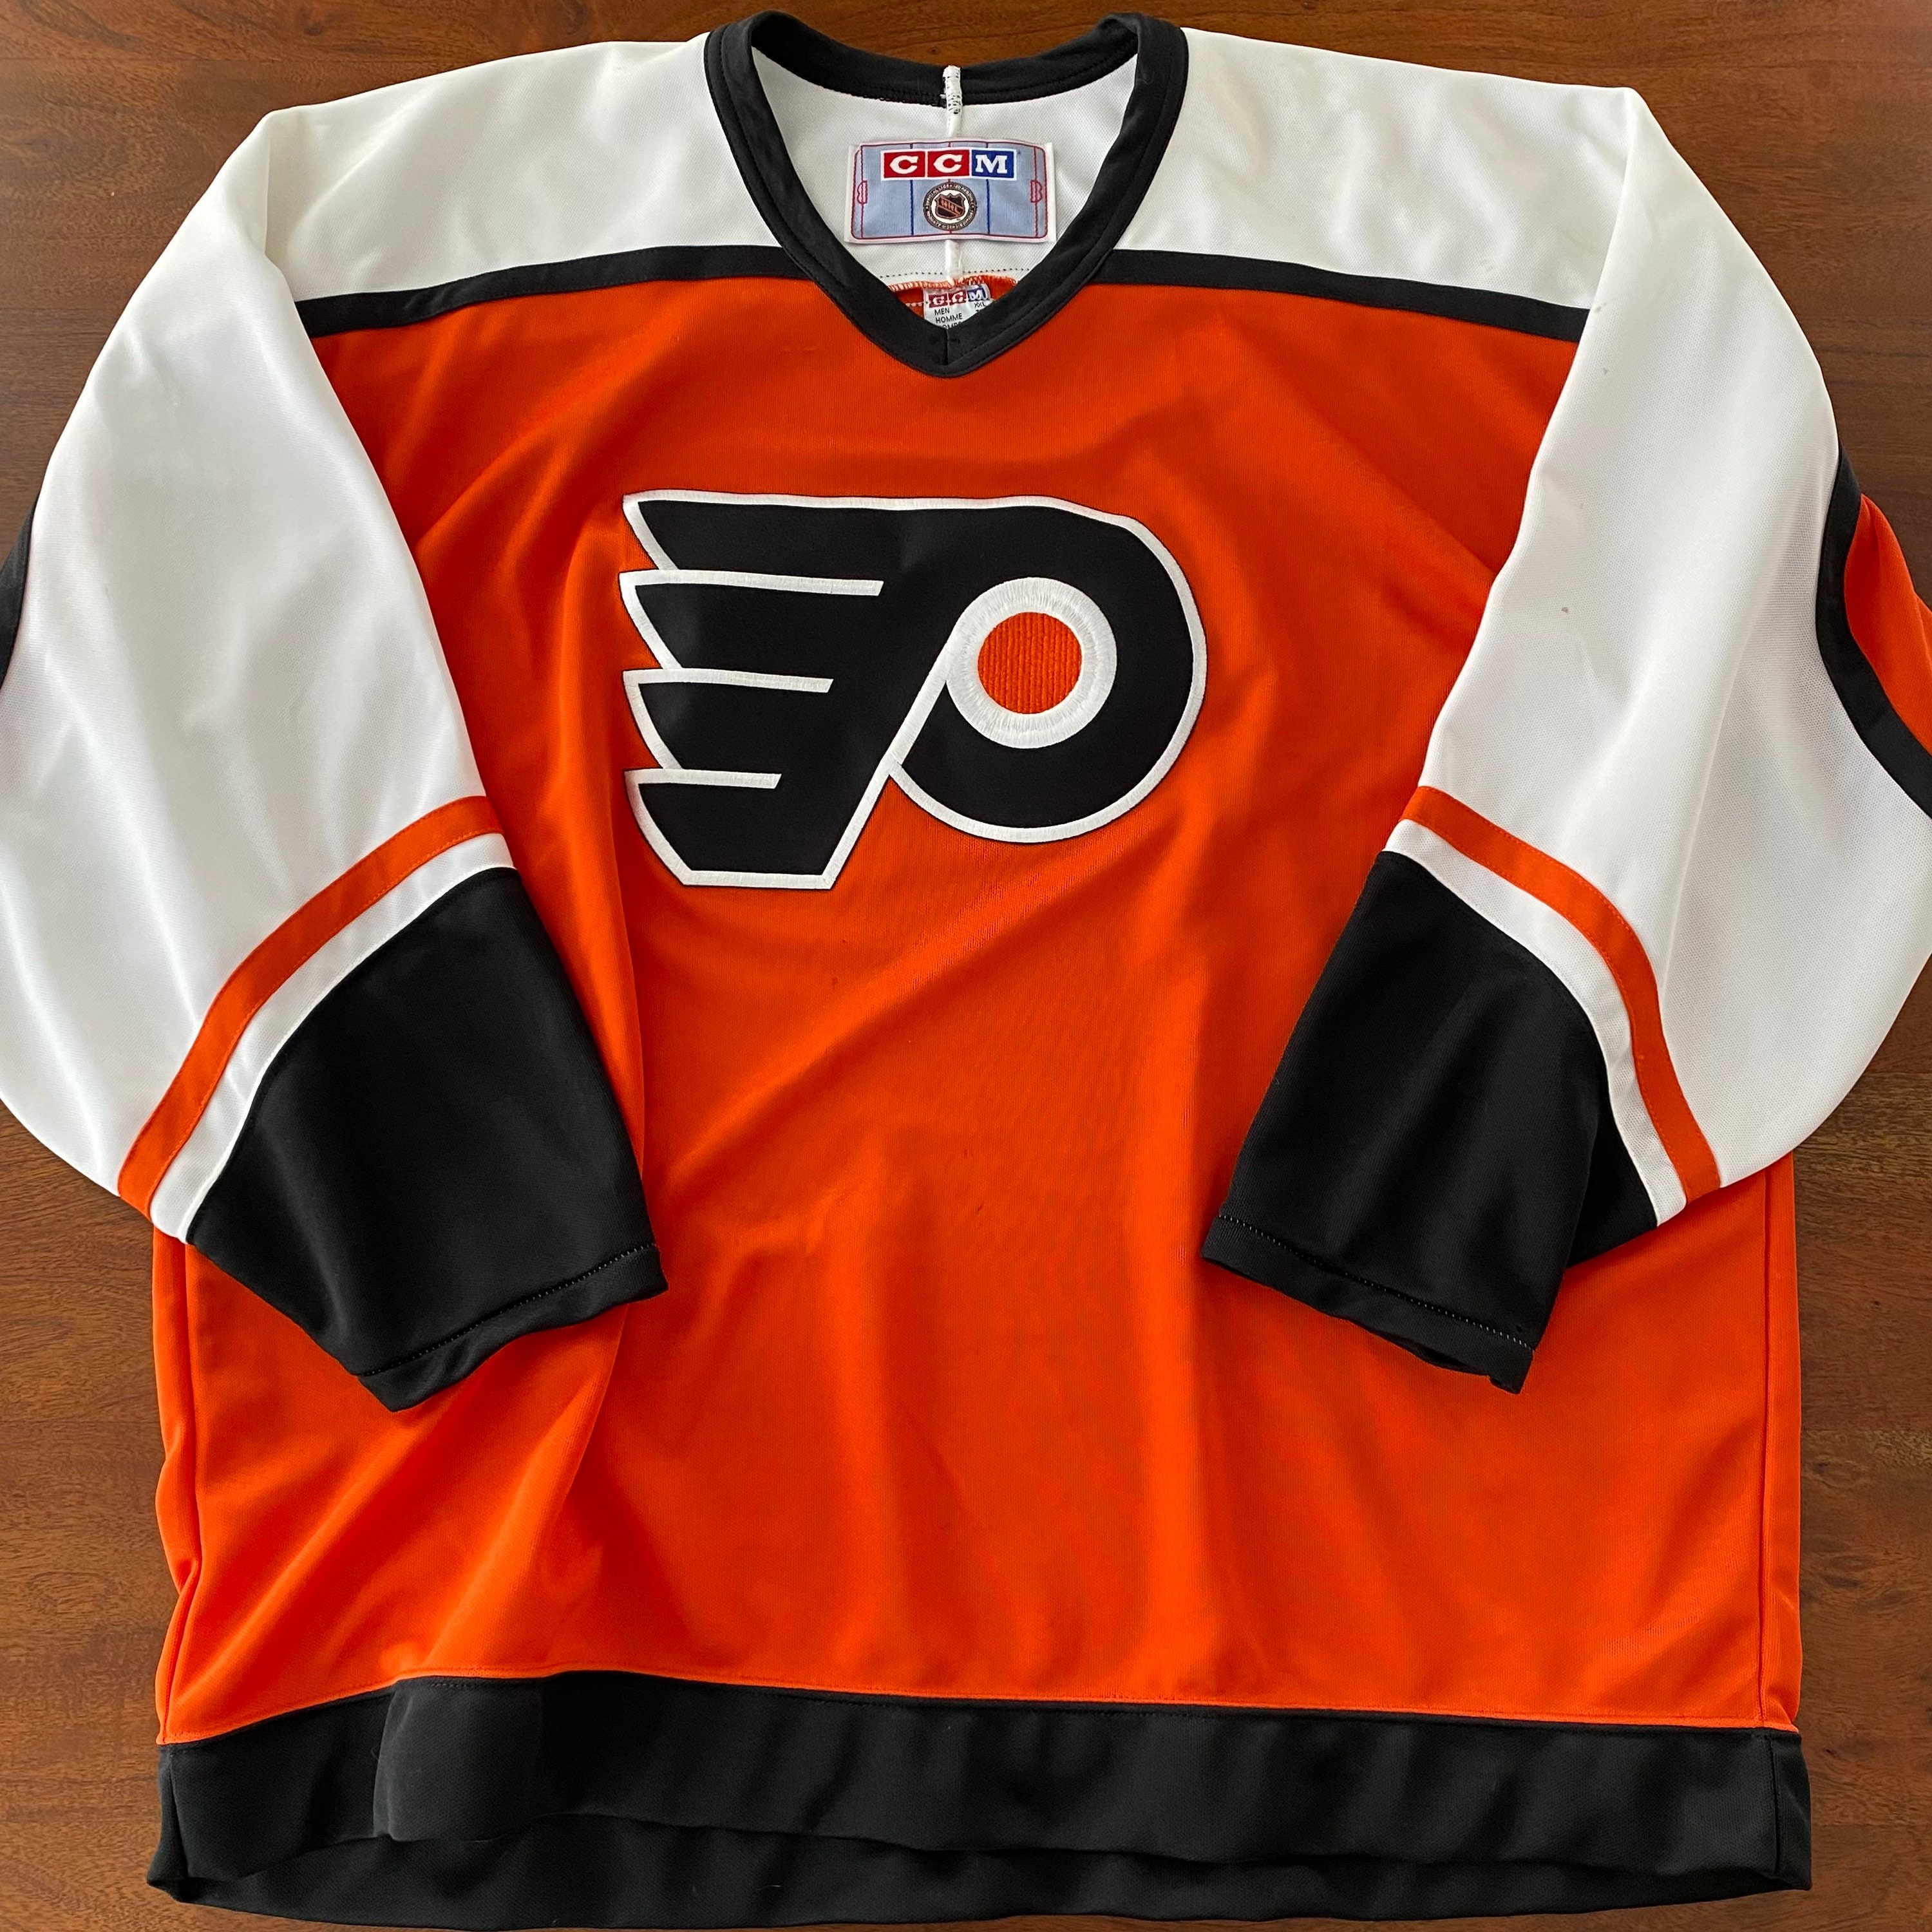 Philadelphia Flyers Home Jersey (2007-09) & Alternate Jersey (2009-10)  (Courtesy - Cool Hockey)